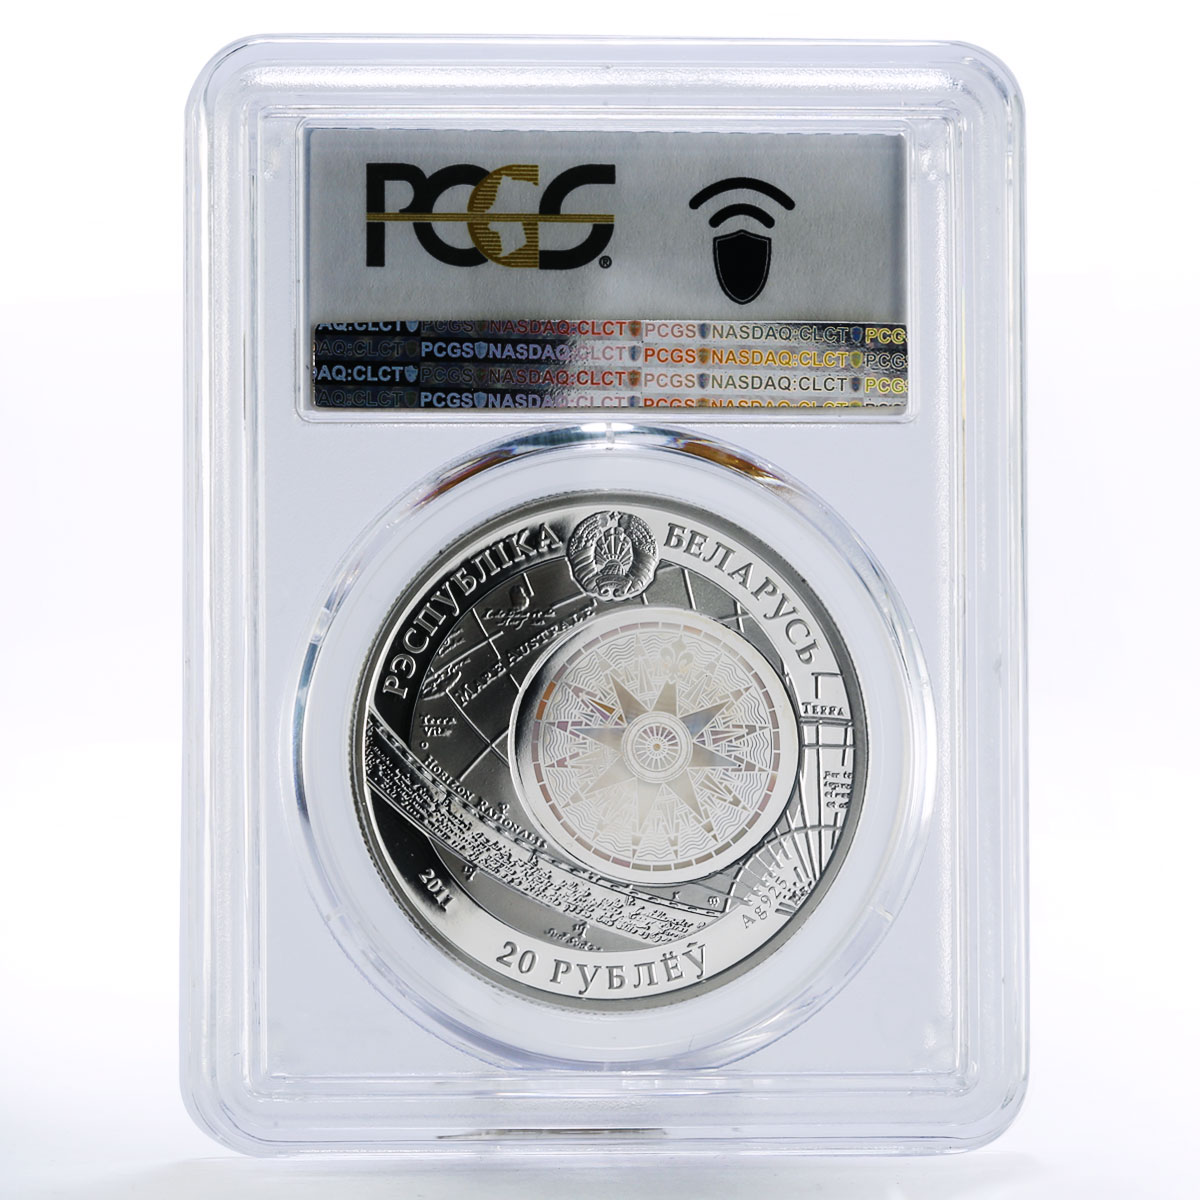 Belarus 20 rubles Sailing Ships Kruzenstern PR69 PCGS hologram silver coin 2011